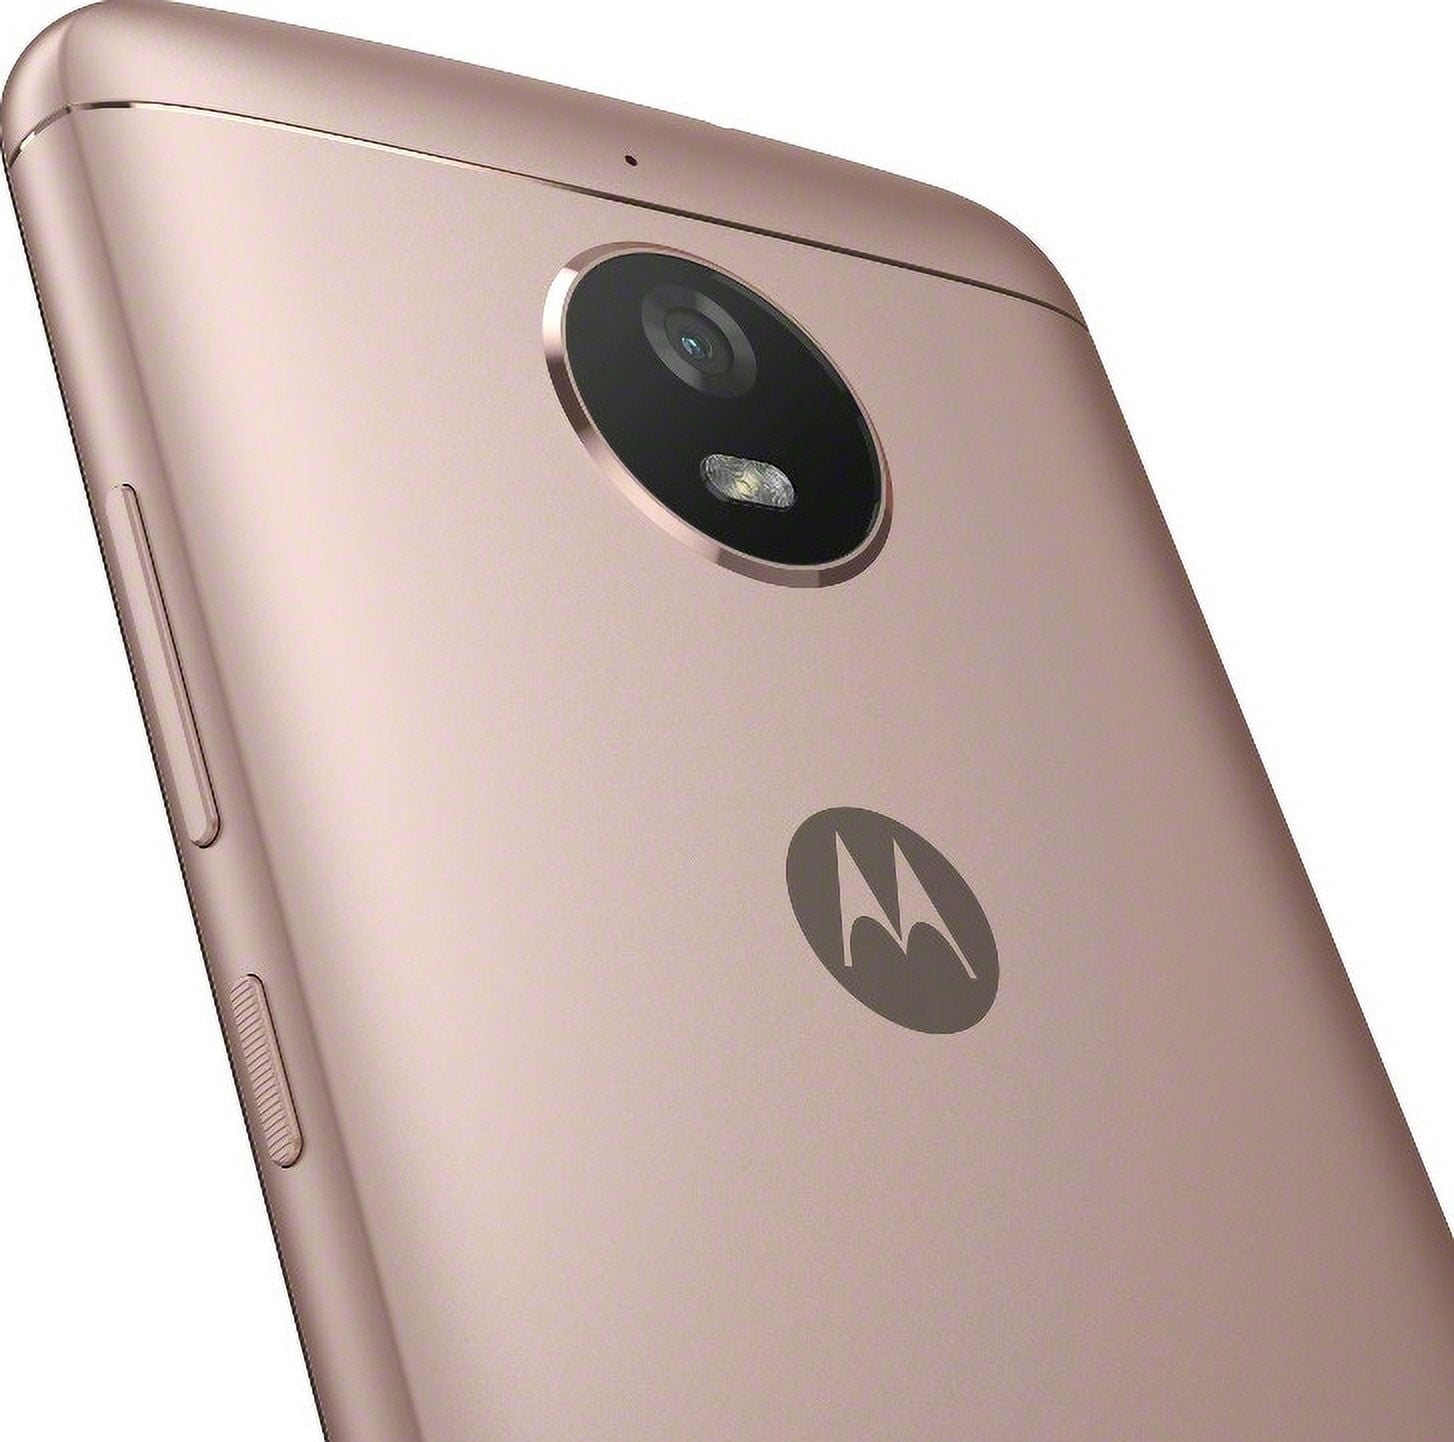  Moto E Plus (4th Generation) - 16 GB - Unlocked  (AT&T/Sprint/T-Mobile/Verizon) - Iron Gray : Everything Else